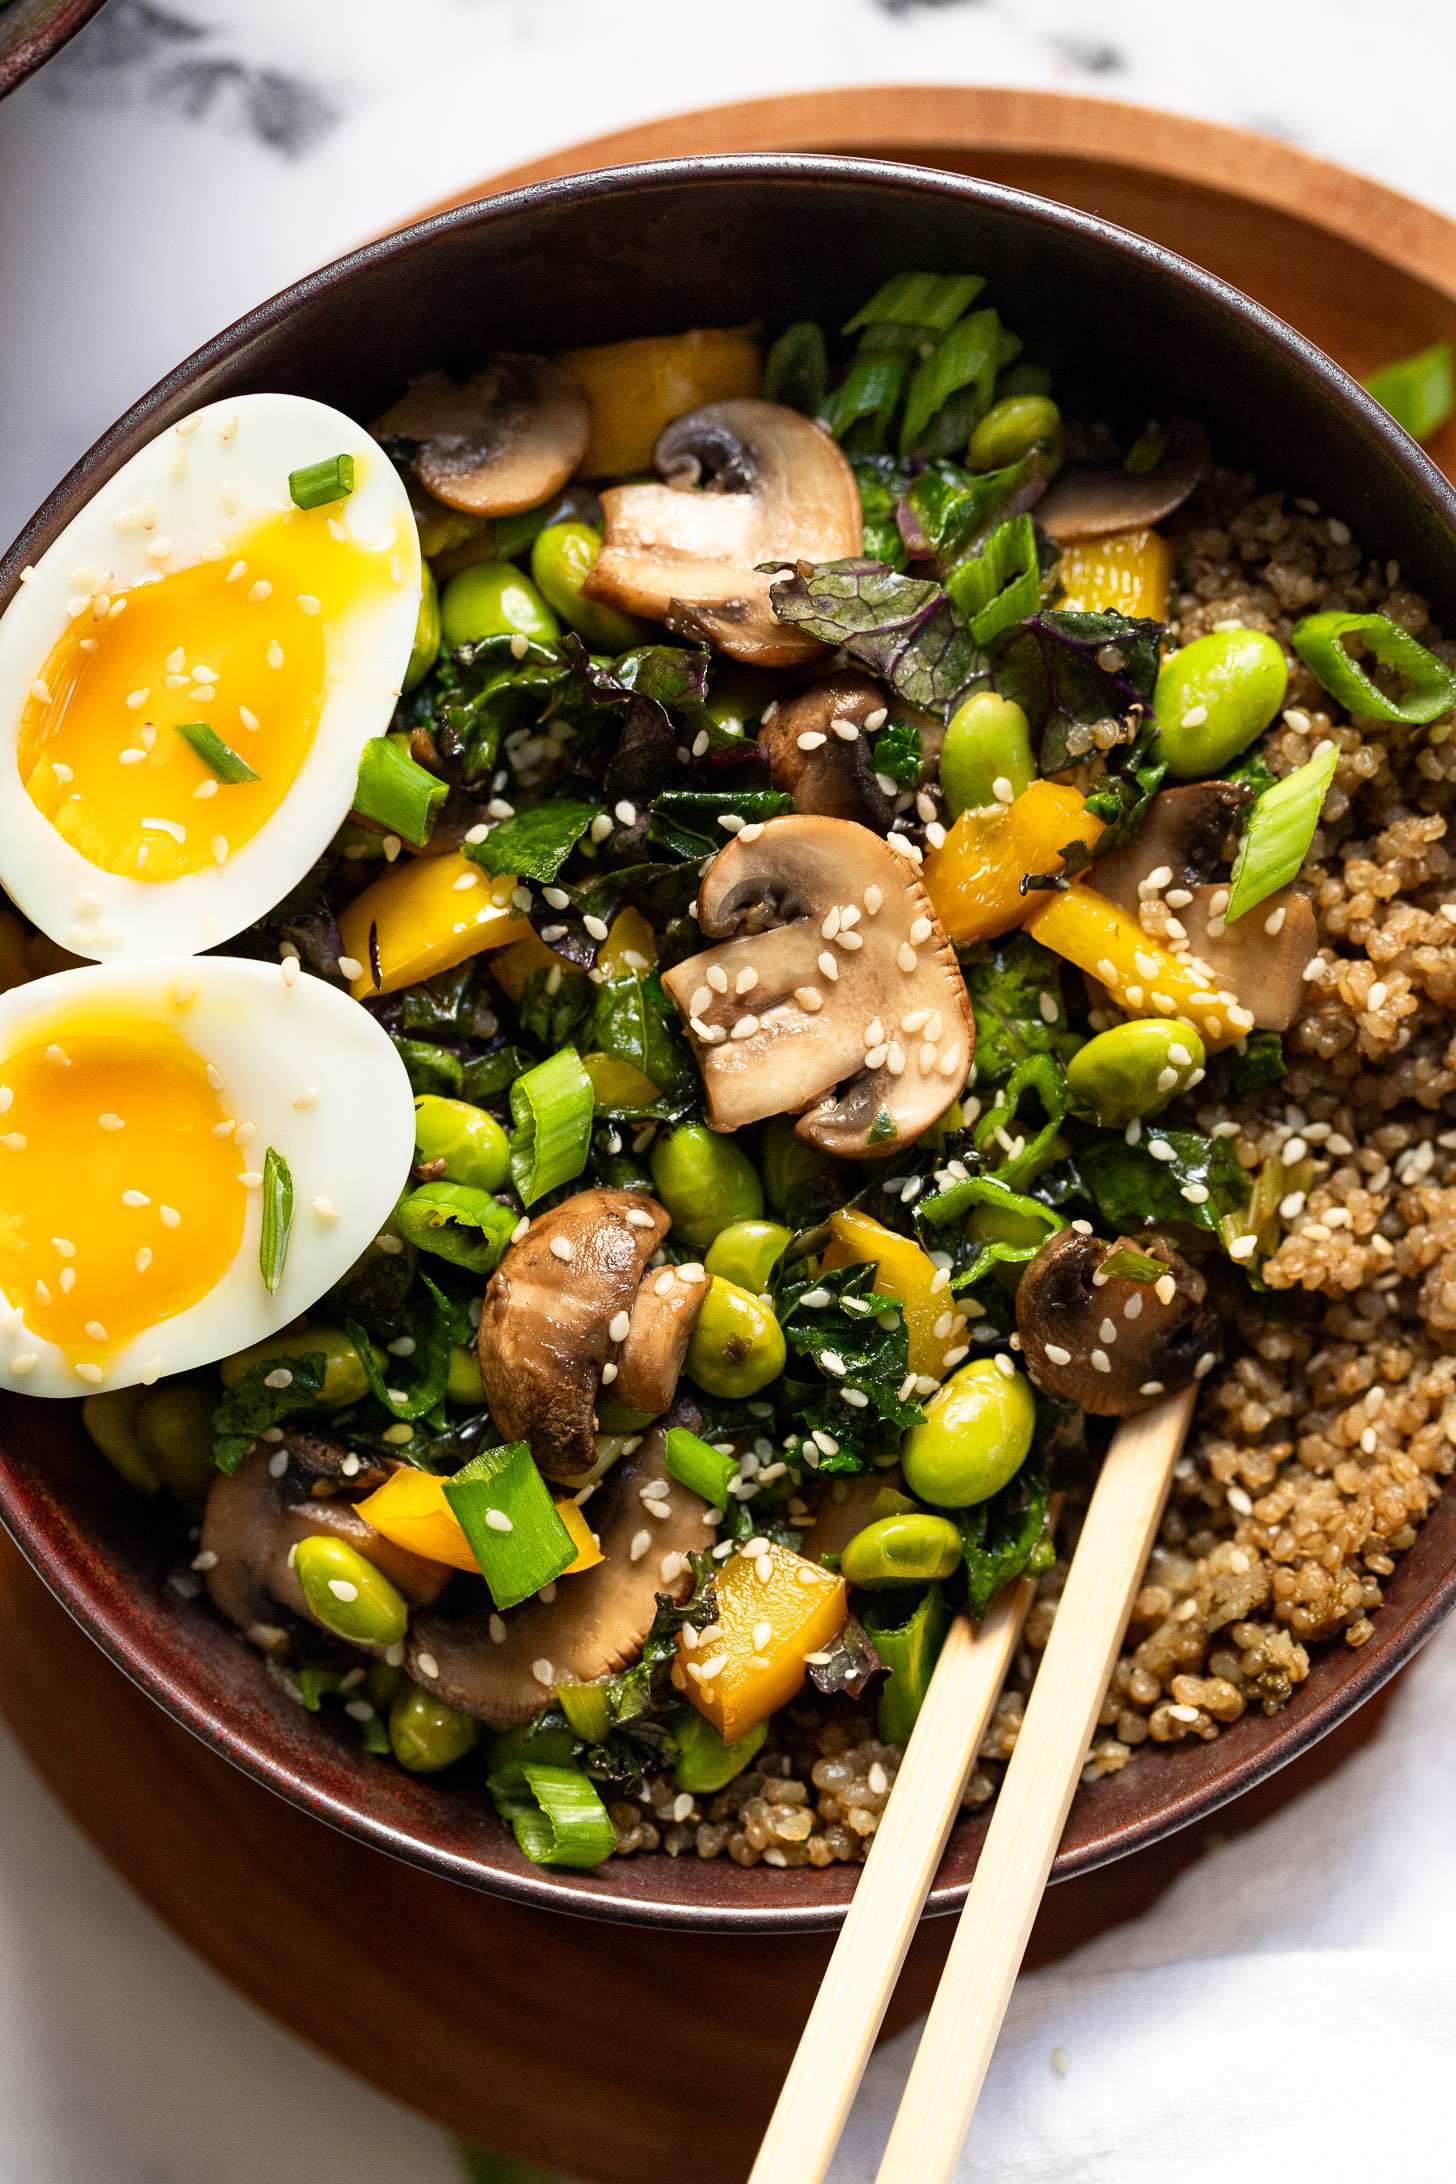 Mushroom and edamame breakfast bowl with egg and chopsticks.